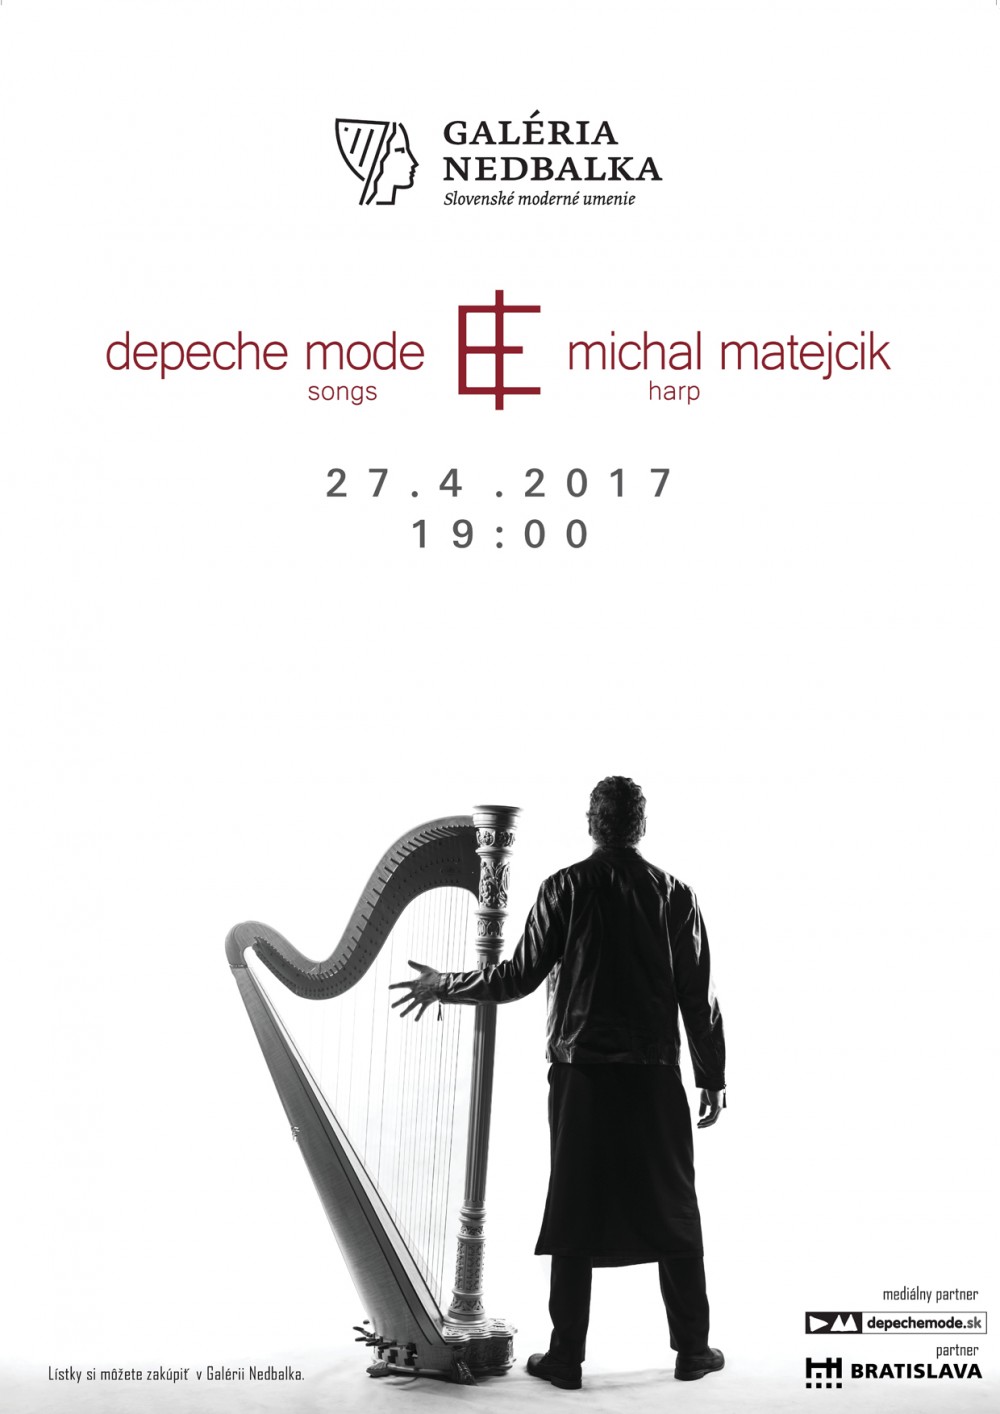 Plagát akcie: Depeche Mode Songs - Michal Matejcik Harp